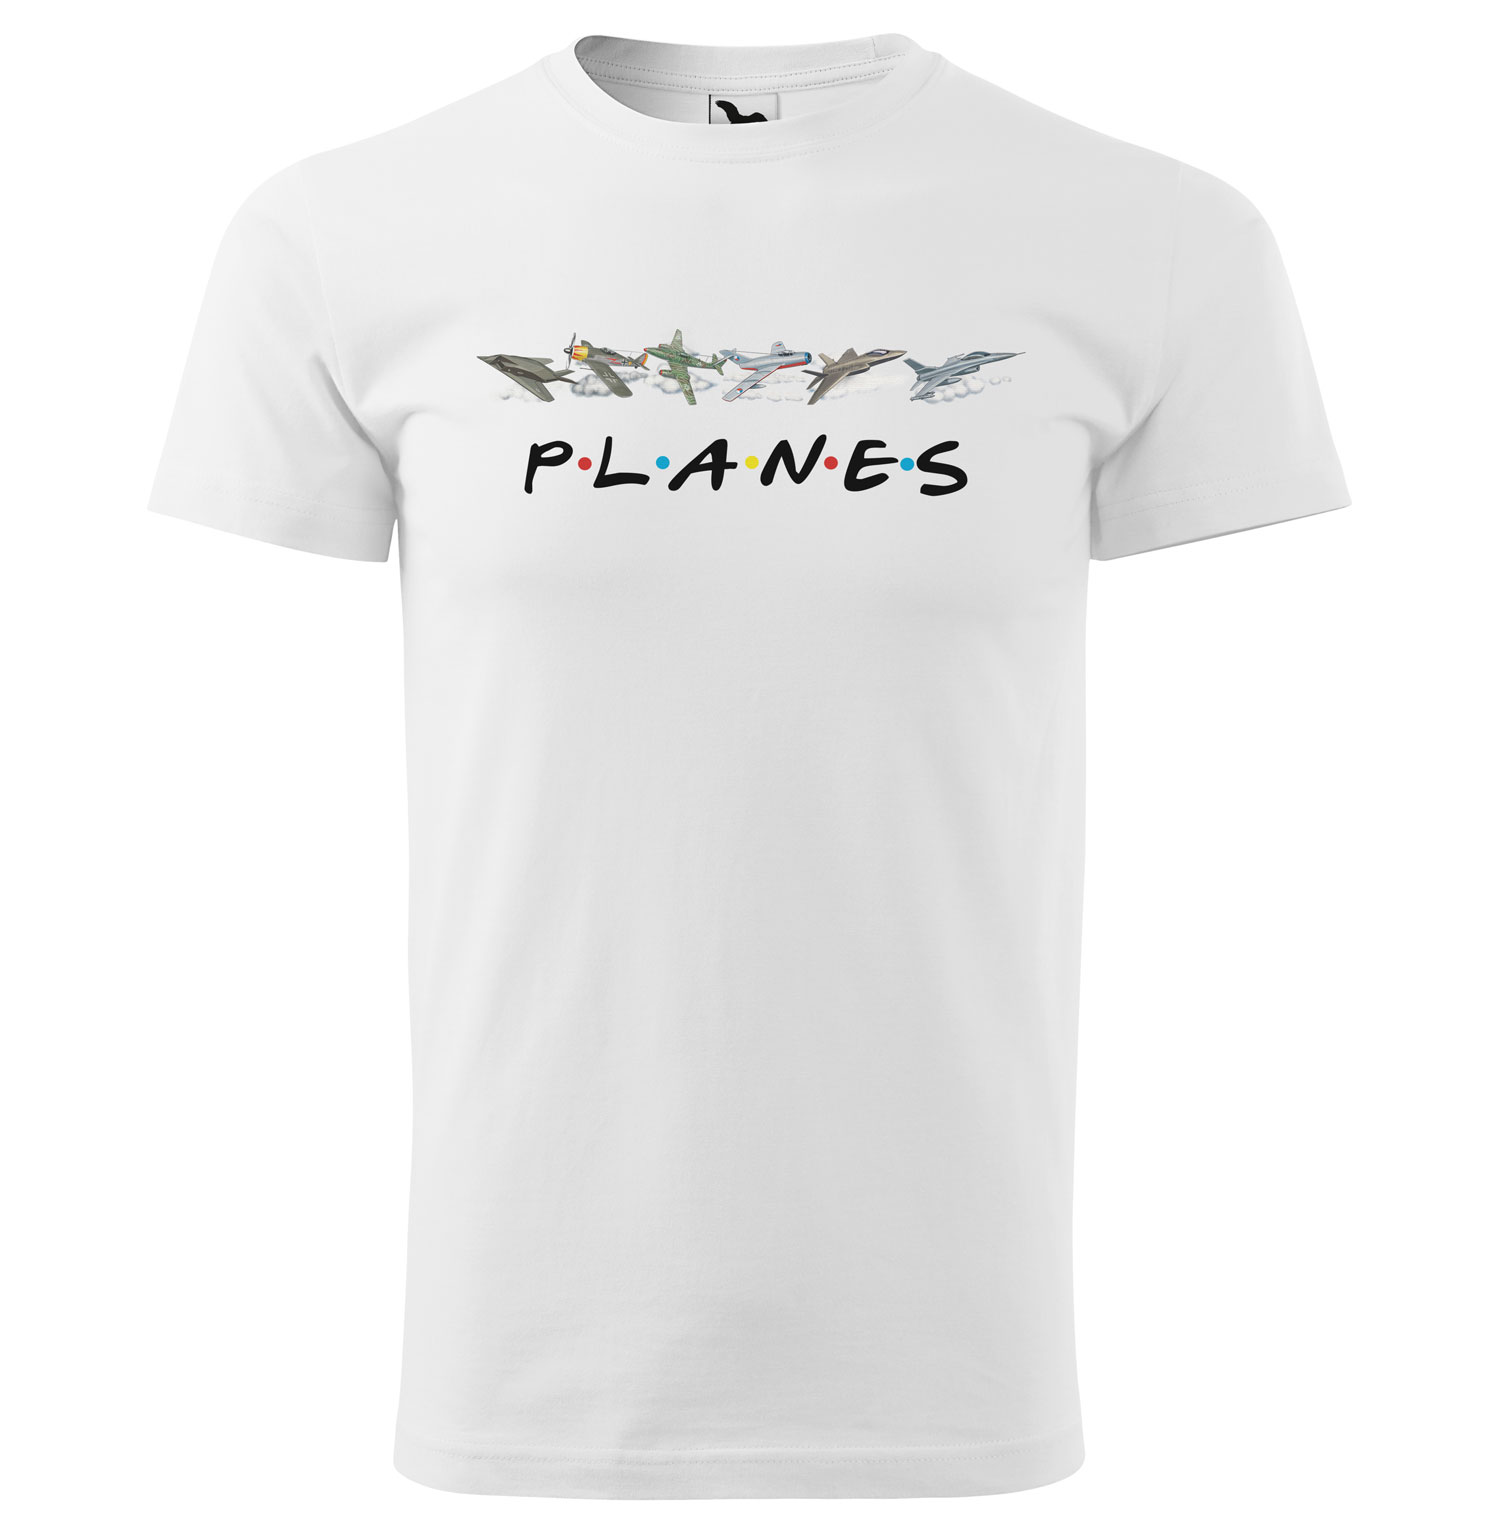 Tričko Planes (Velikost: M, Typ: pro muže, Barva trička: Bílá)